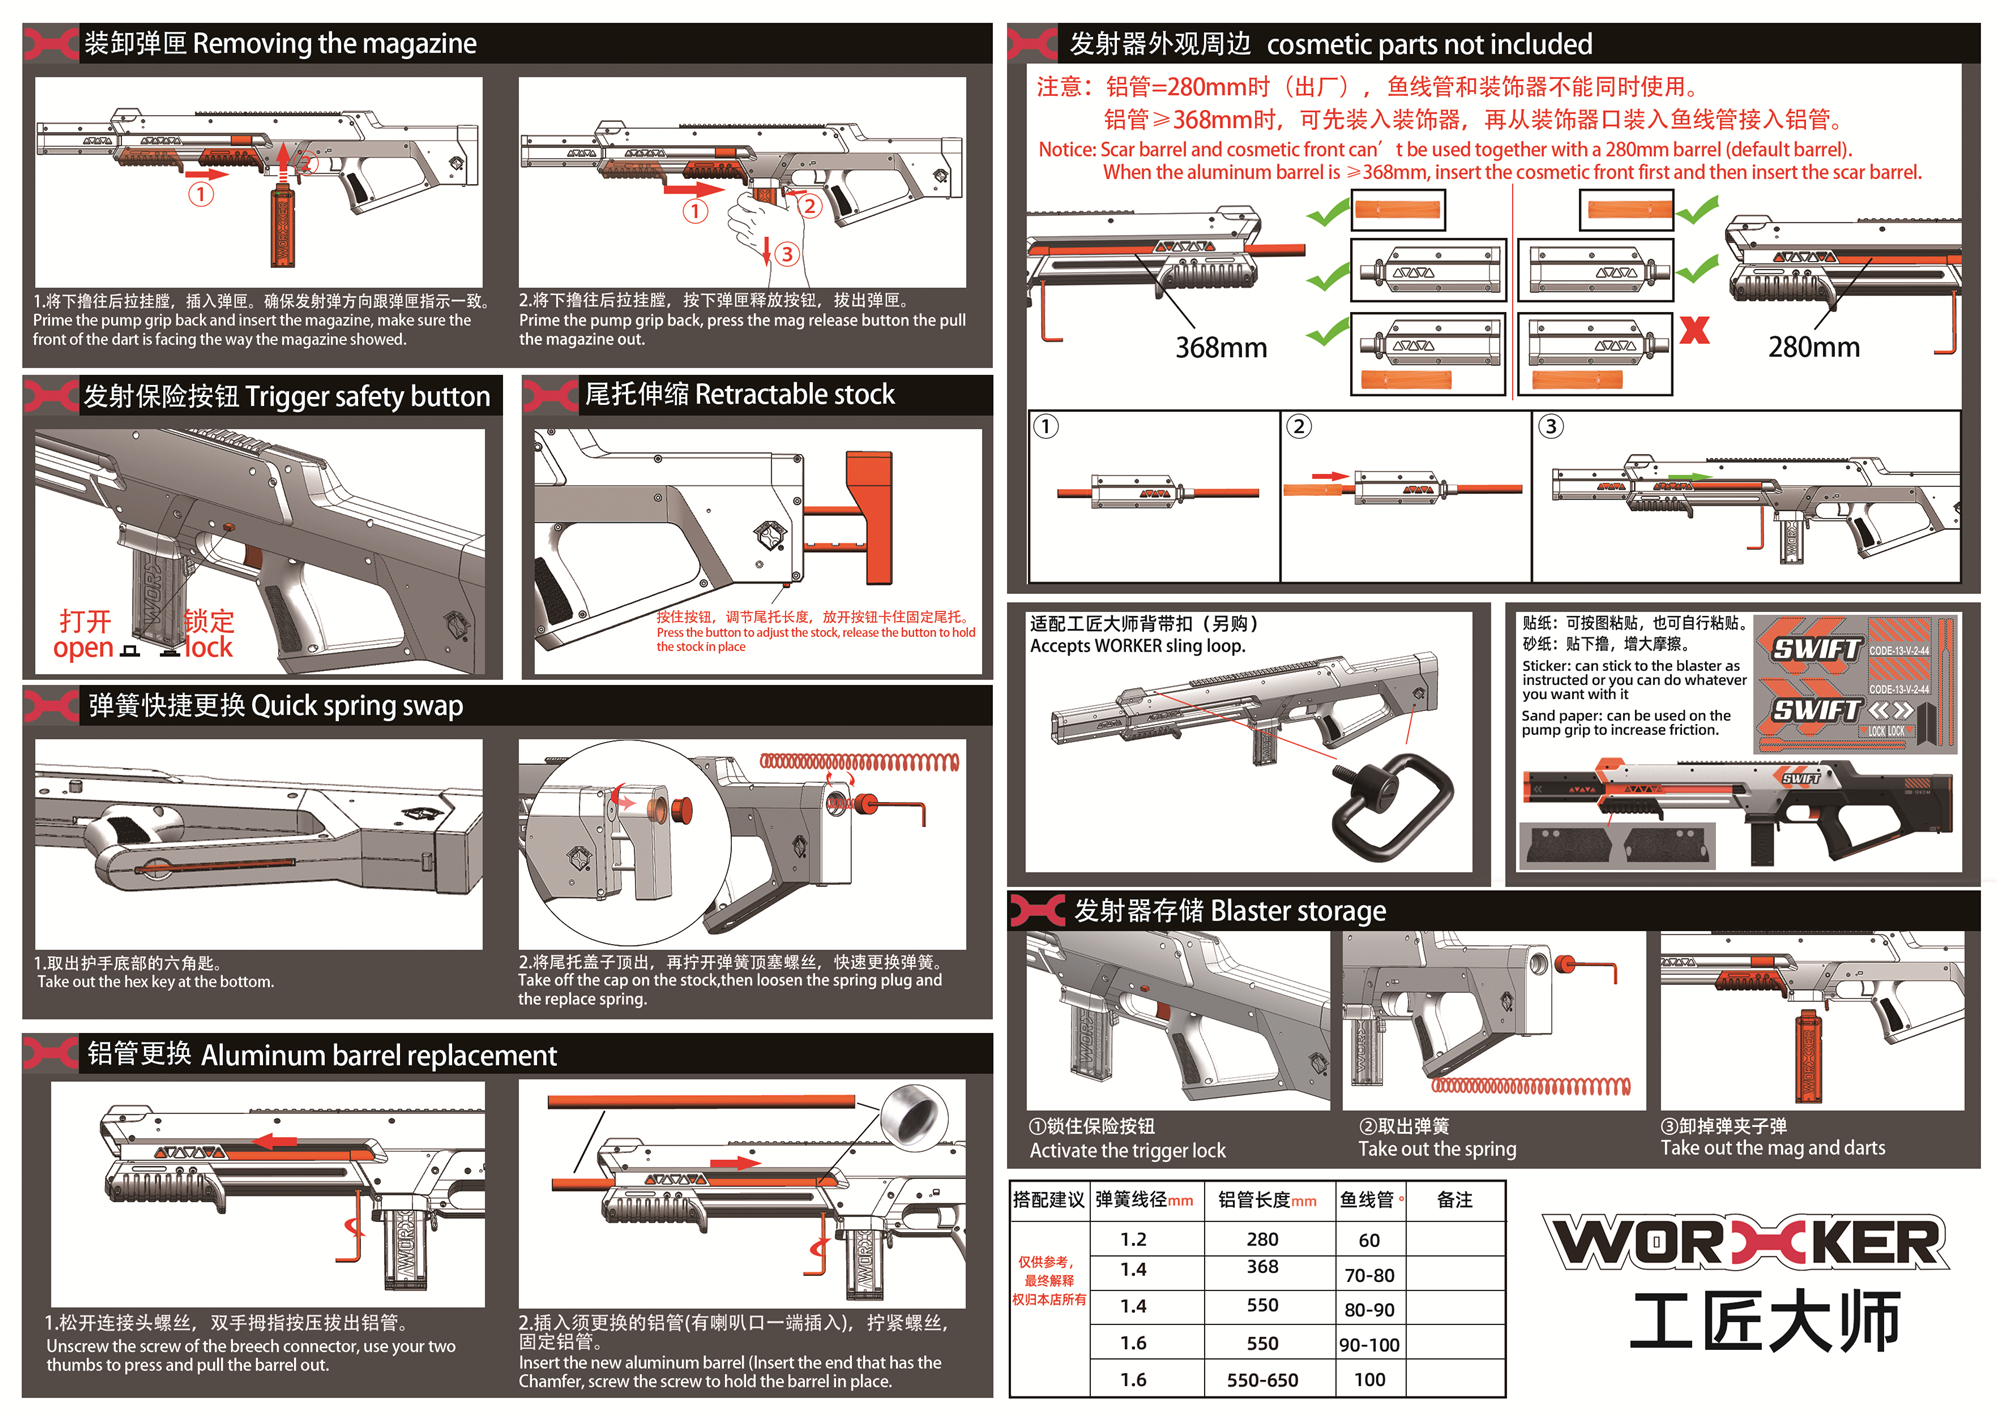 Worker Mod DIY Nerf Gun, Worker Swift Foam Dart Blaster, Foam Dart Soft Bullet Toy Gun, Sci-fi Toy Gun, Precision Nerf Sniper Rifle